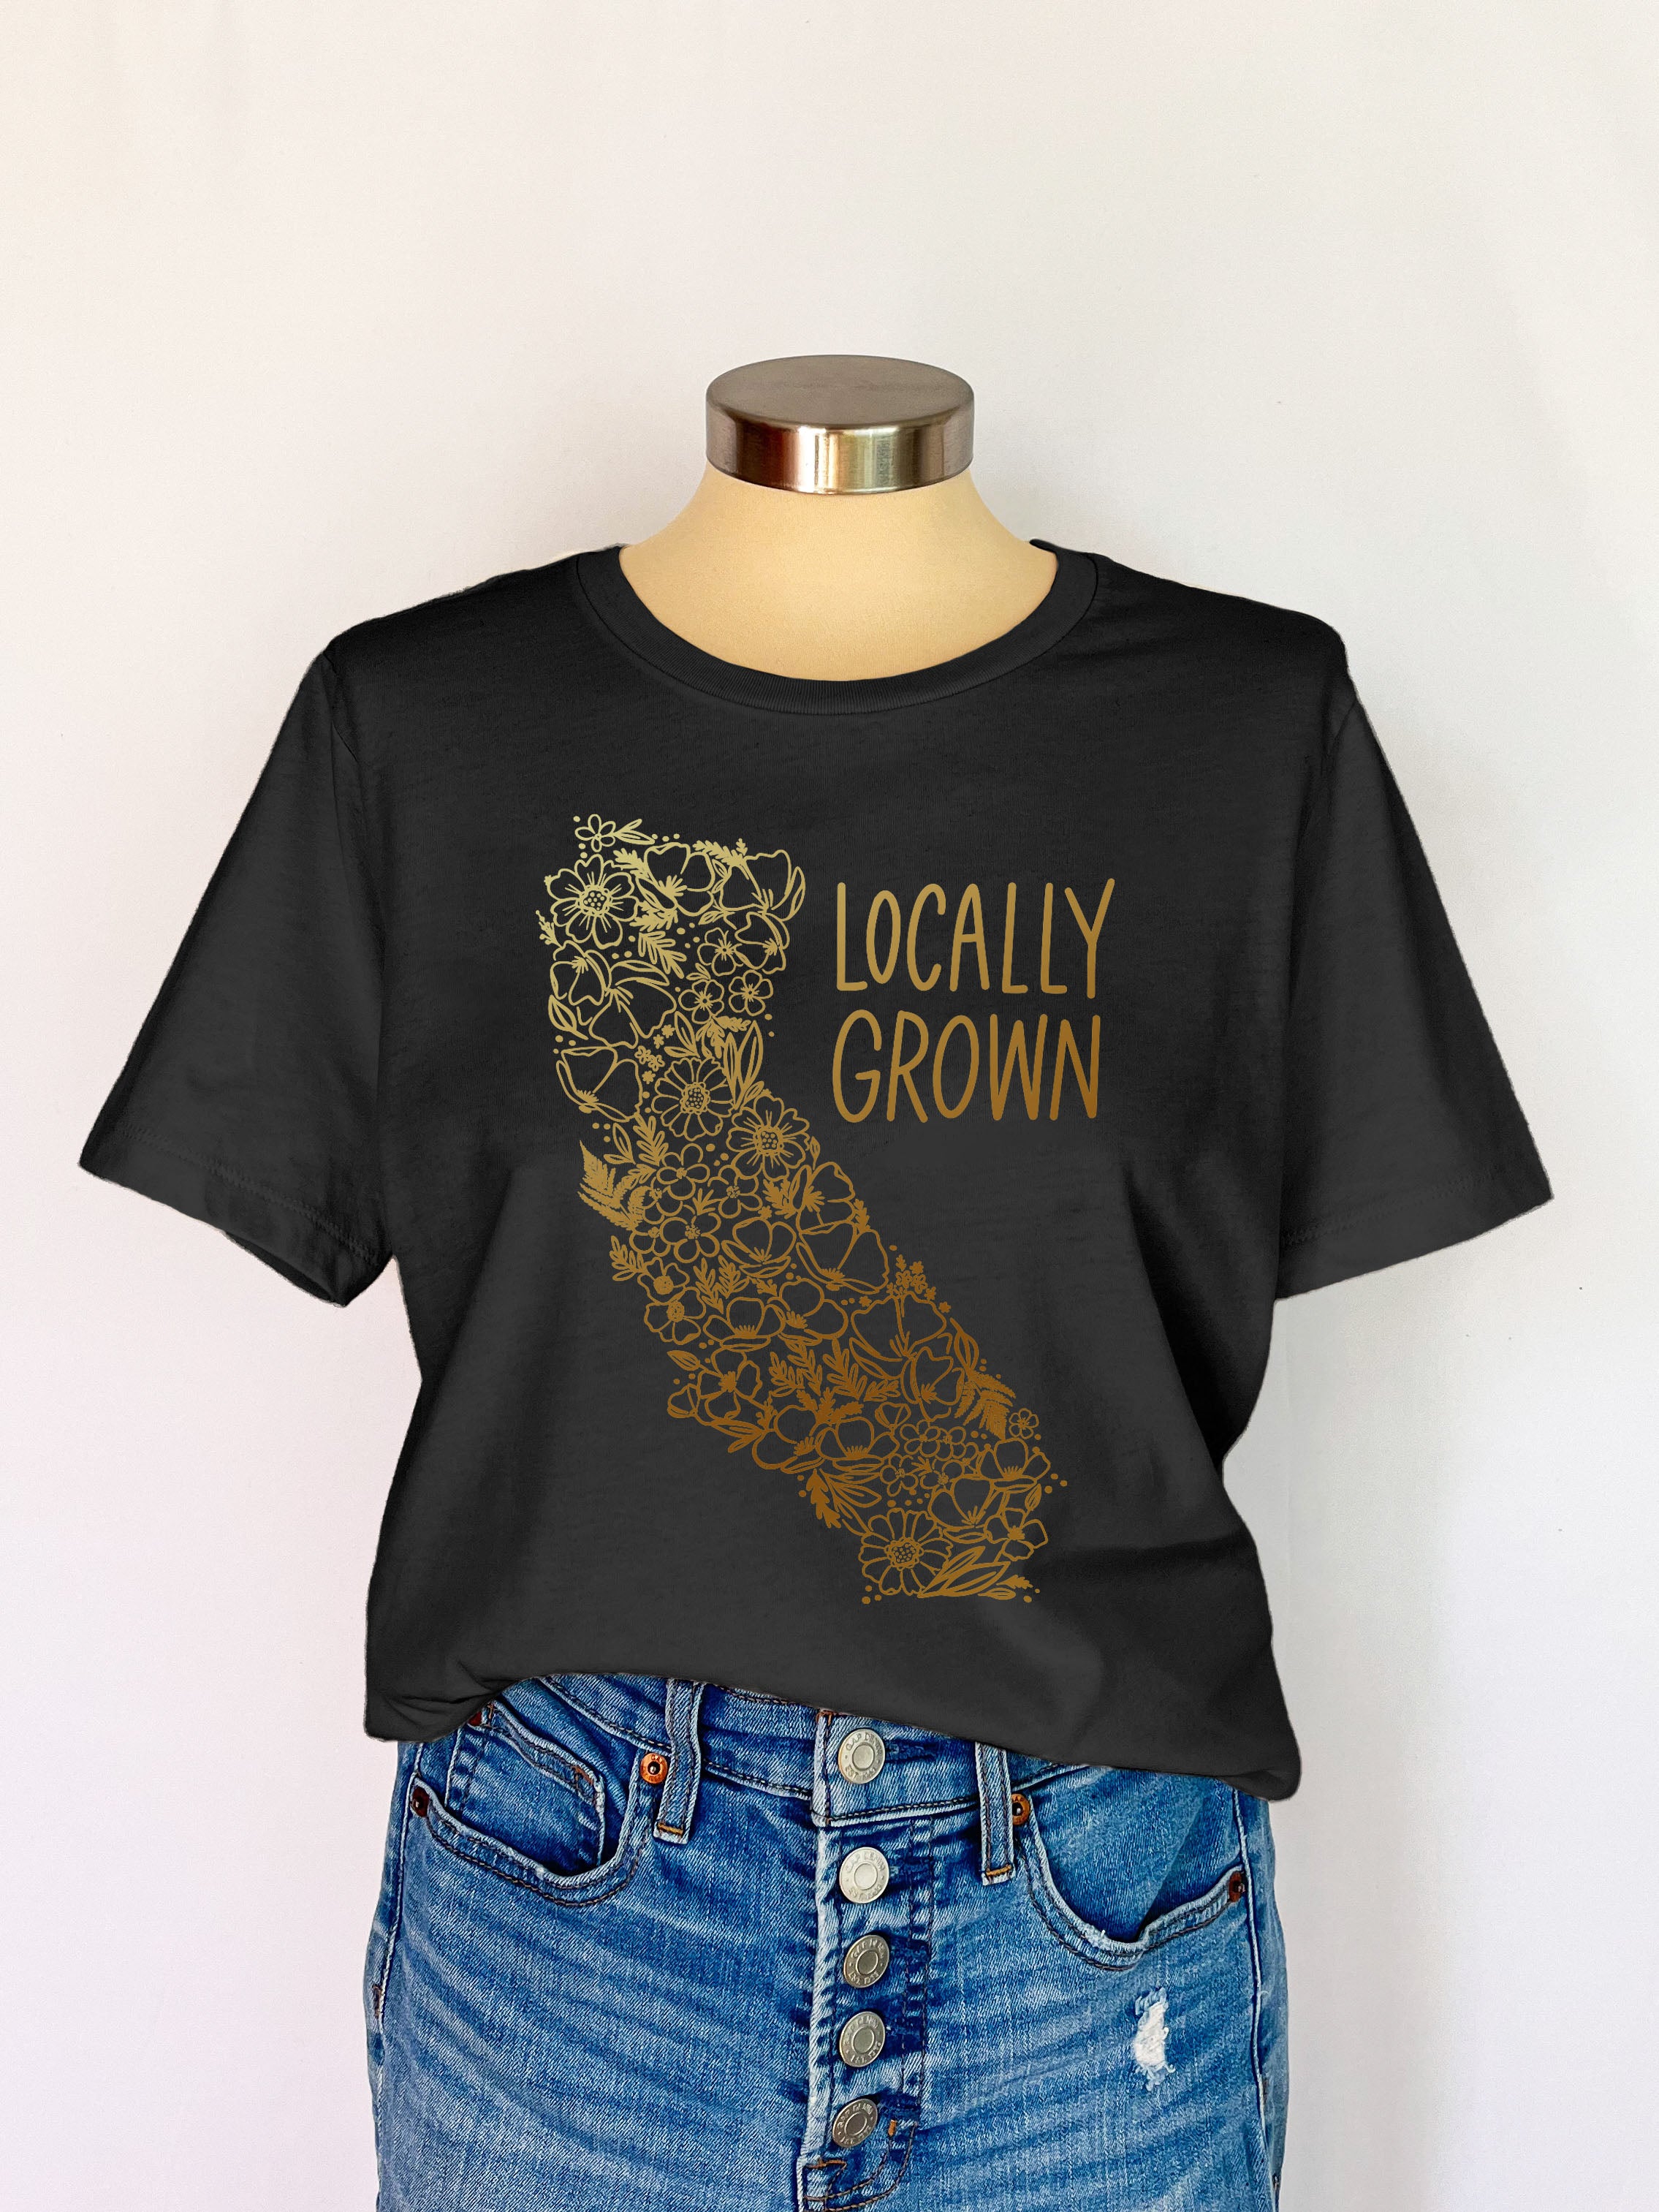 California Locally Grown Graphic T-Shirt